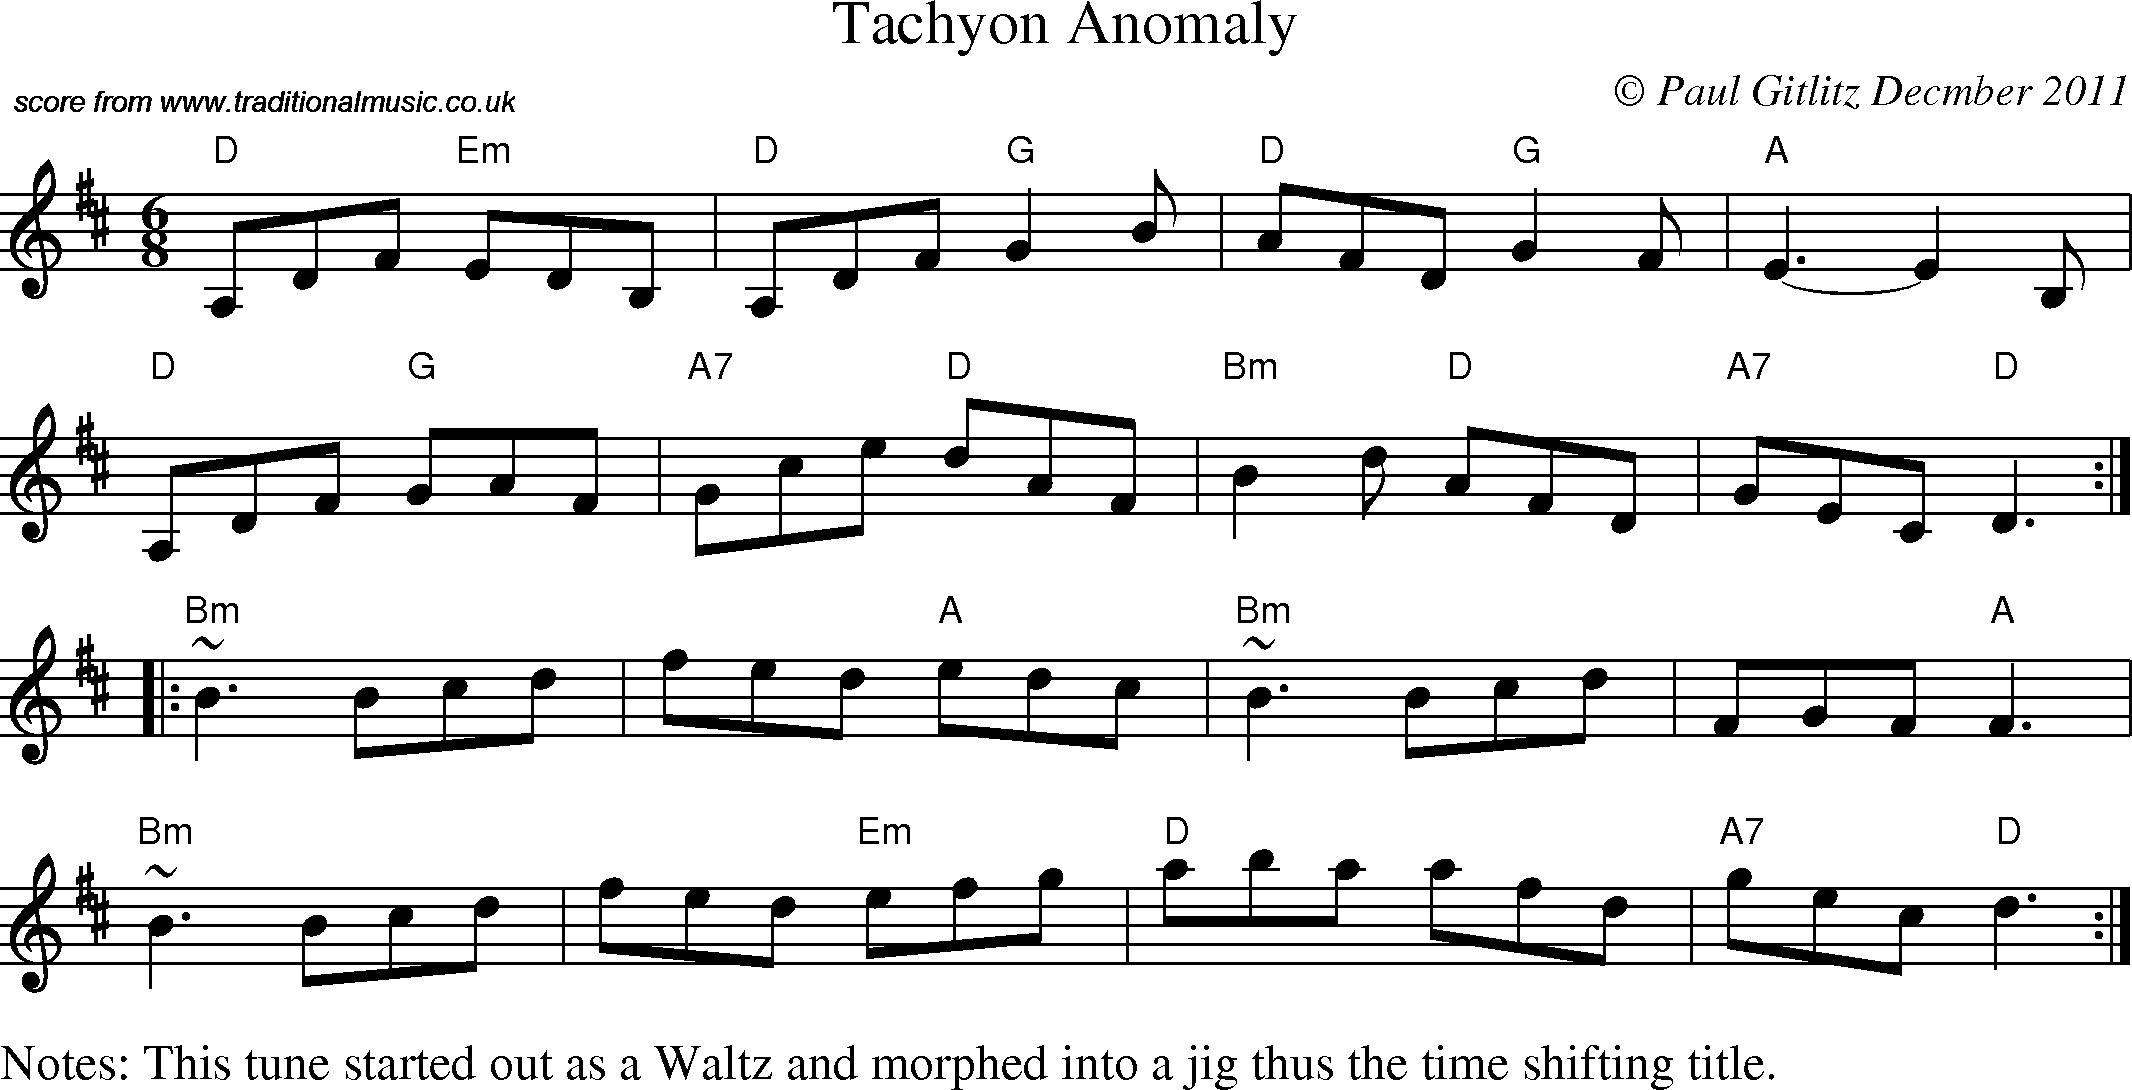 Sheet Music Score for Jig - Tachyon Anomaly